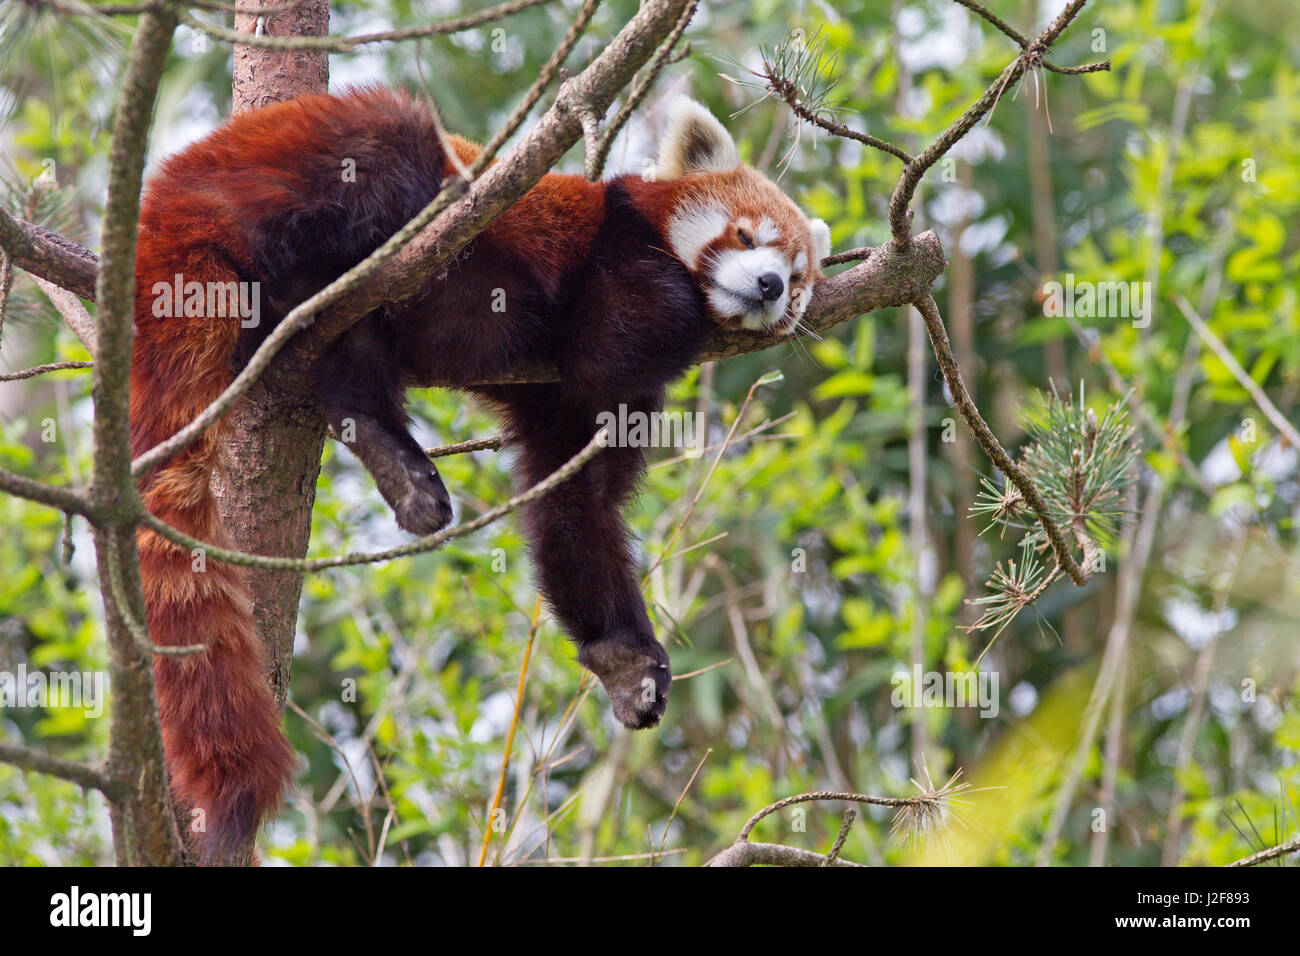 red panda sleeping in a tree Stock Photo